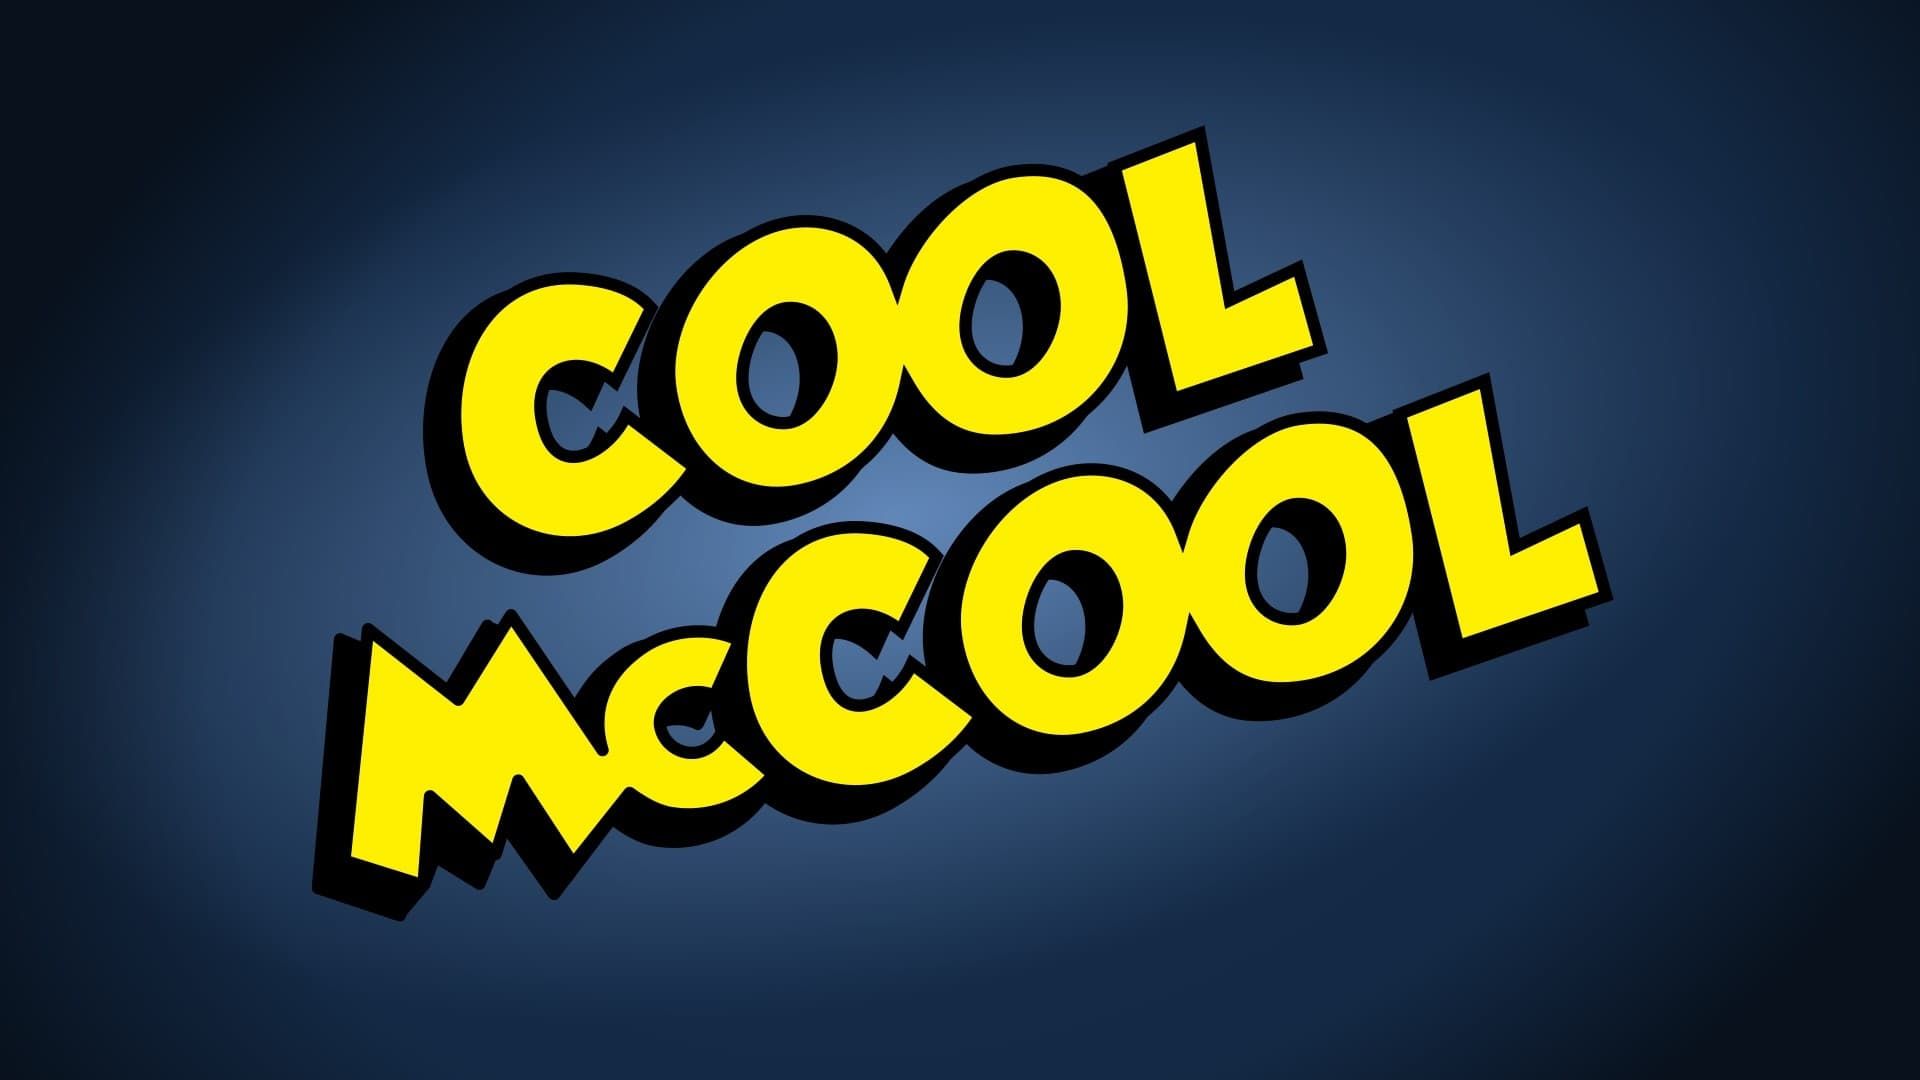 Cool McCool background